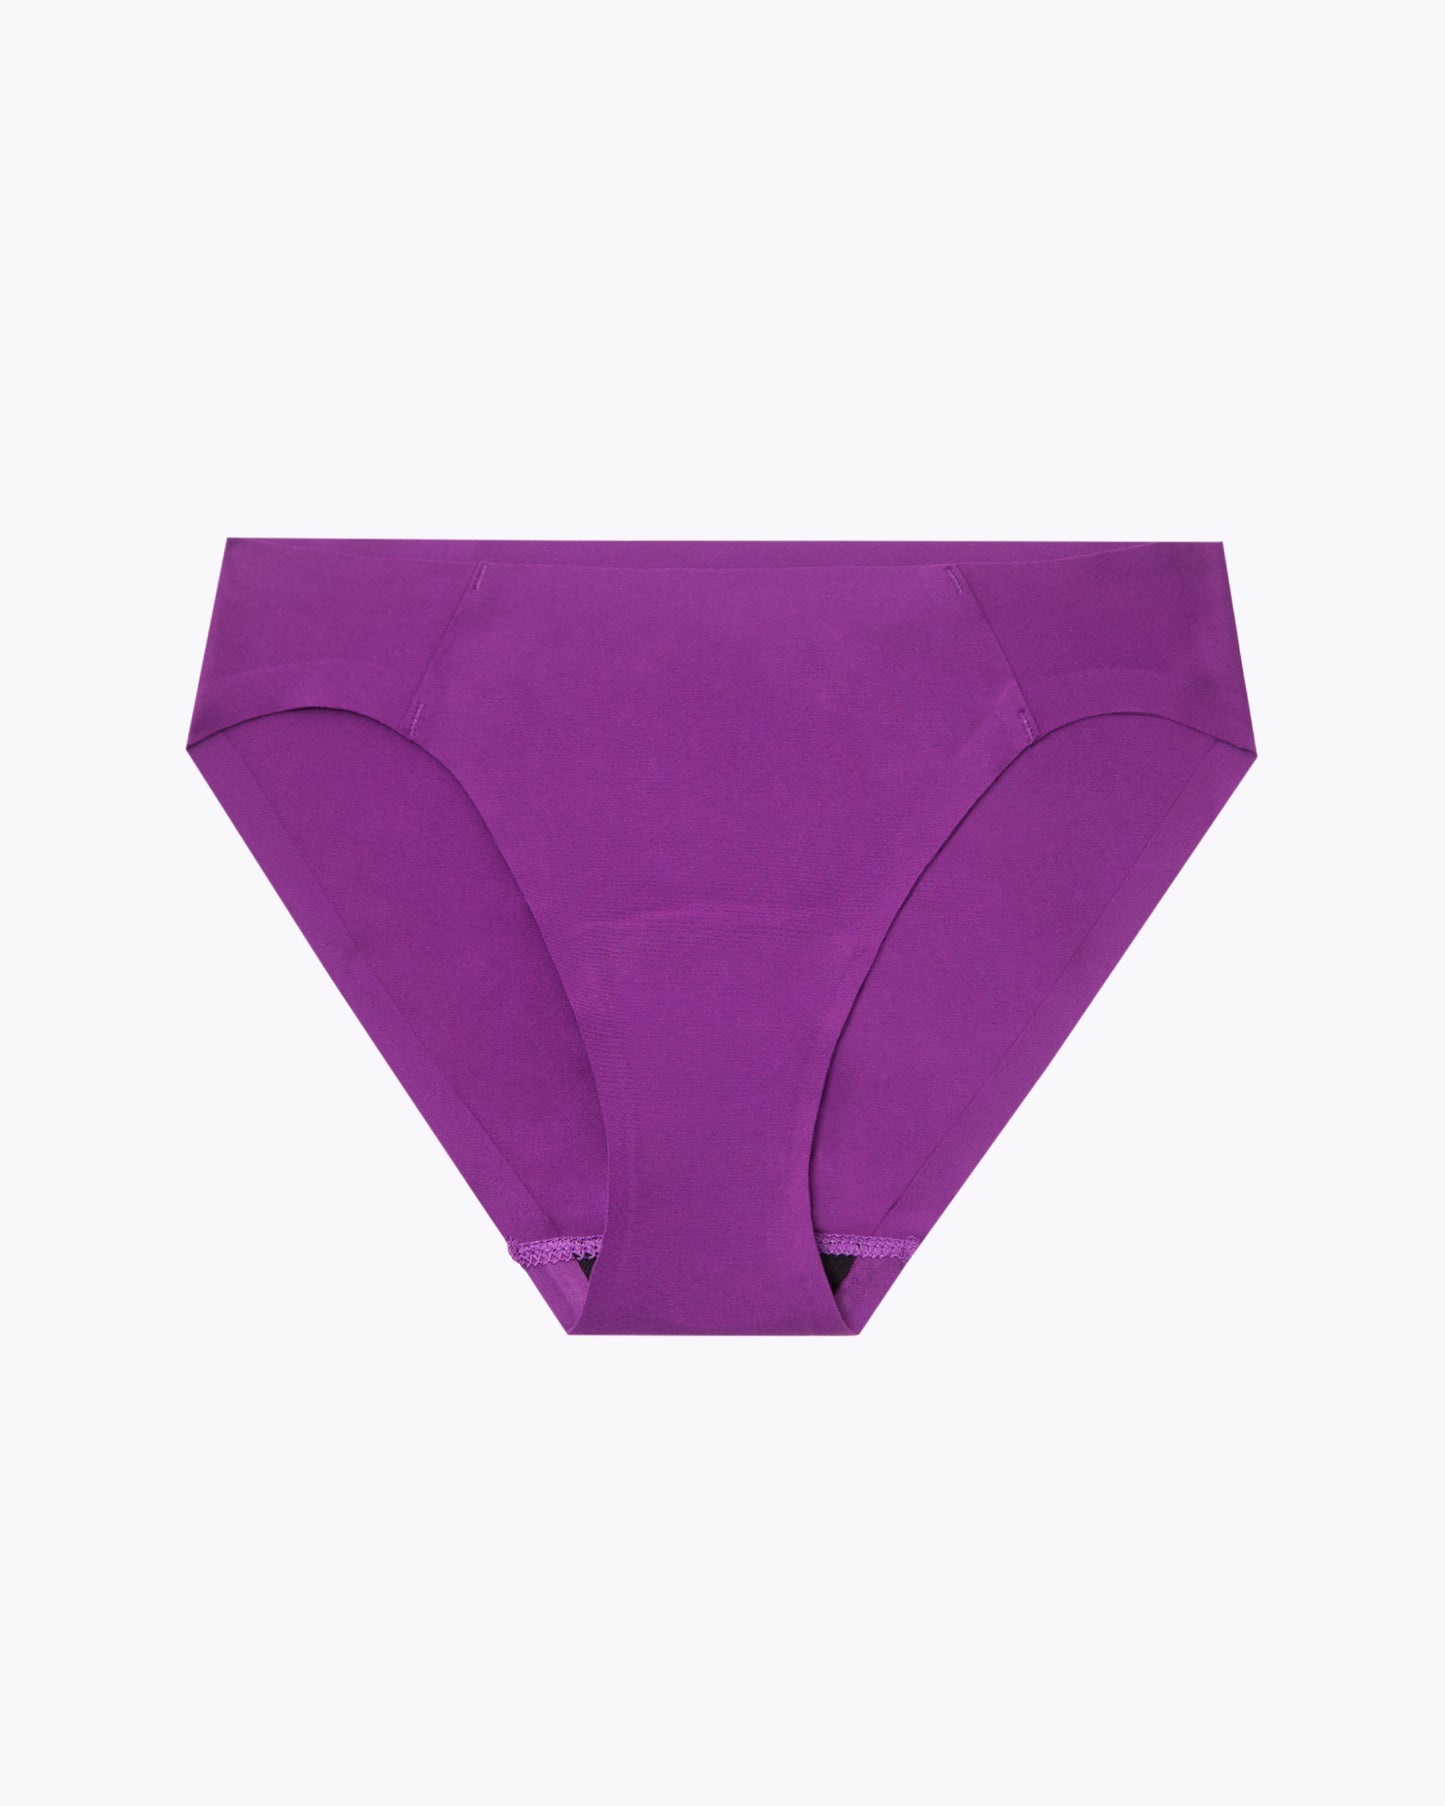 Blog - Personalized Panties